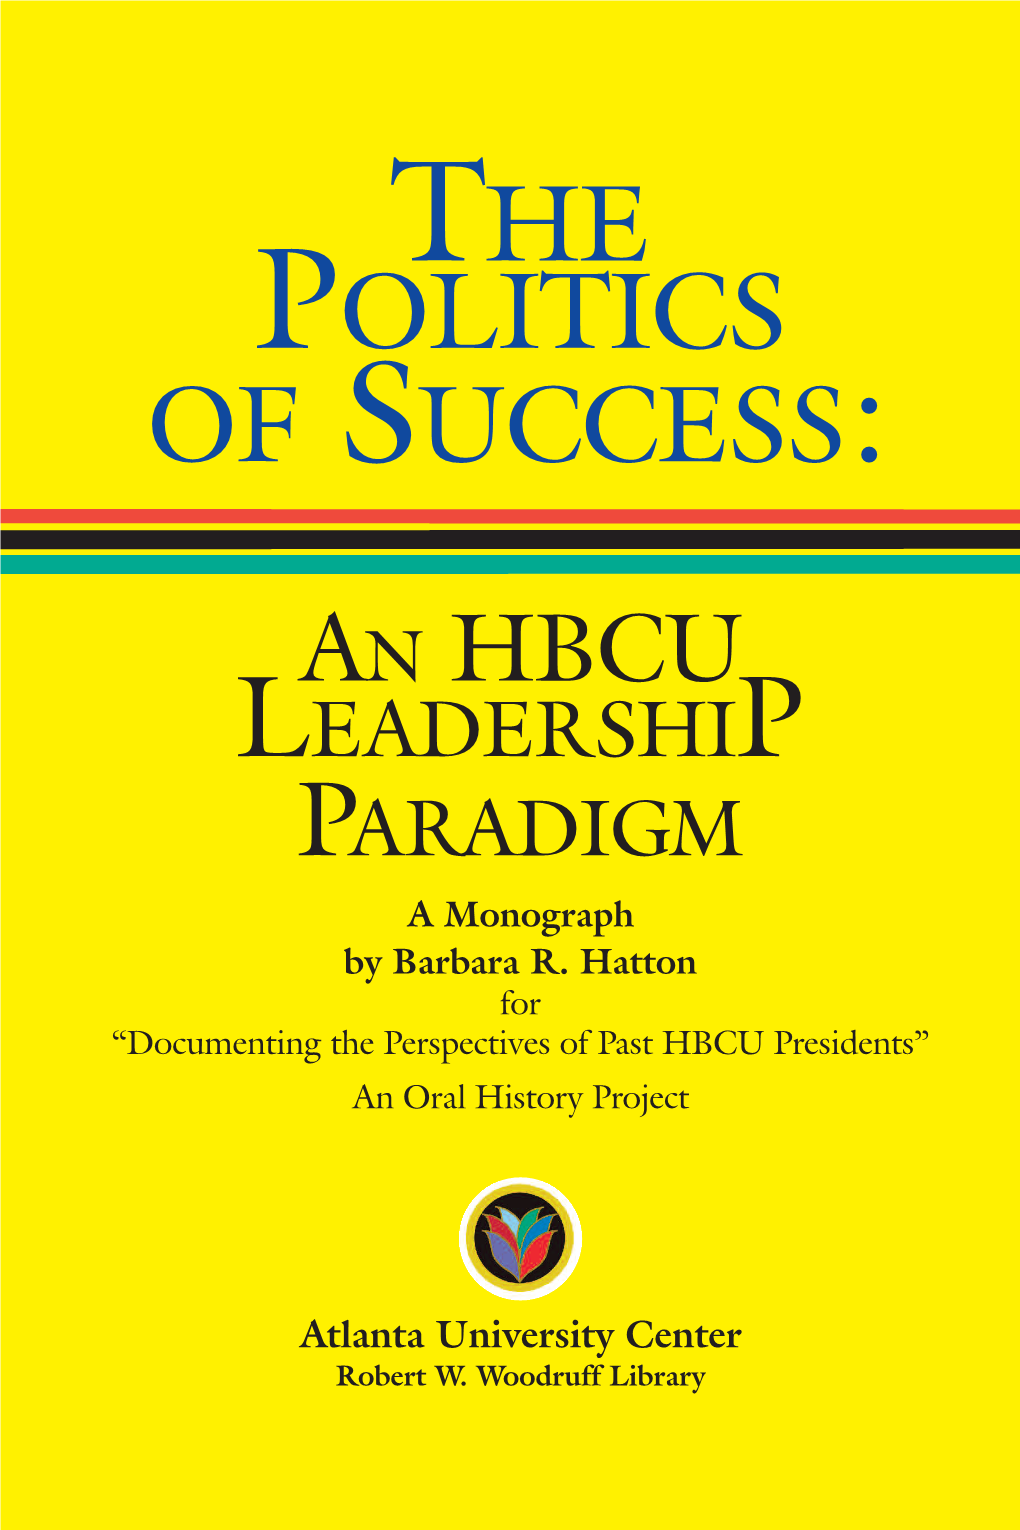 The Politics of Success: an HBCU Leadership Paradigm